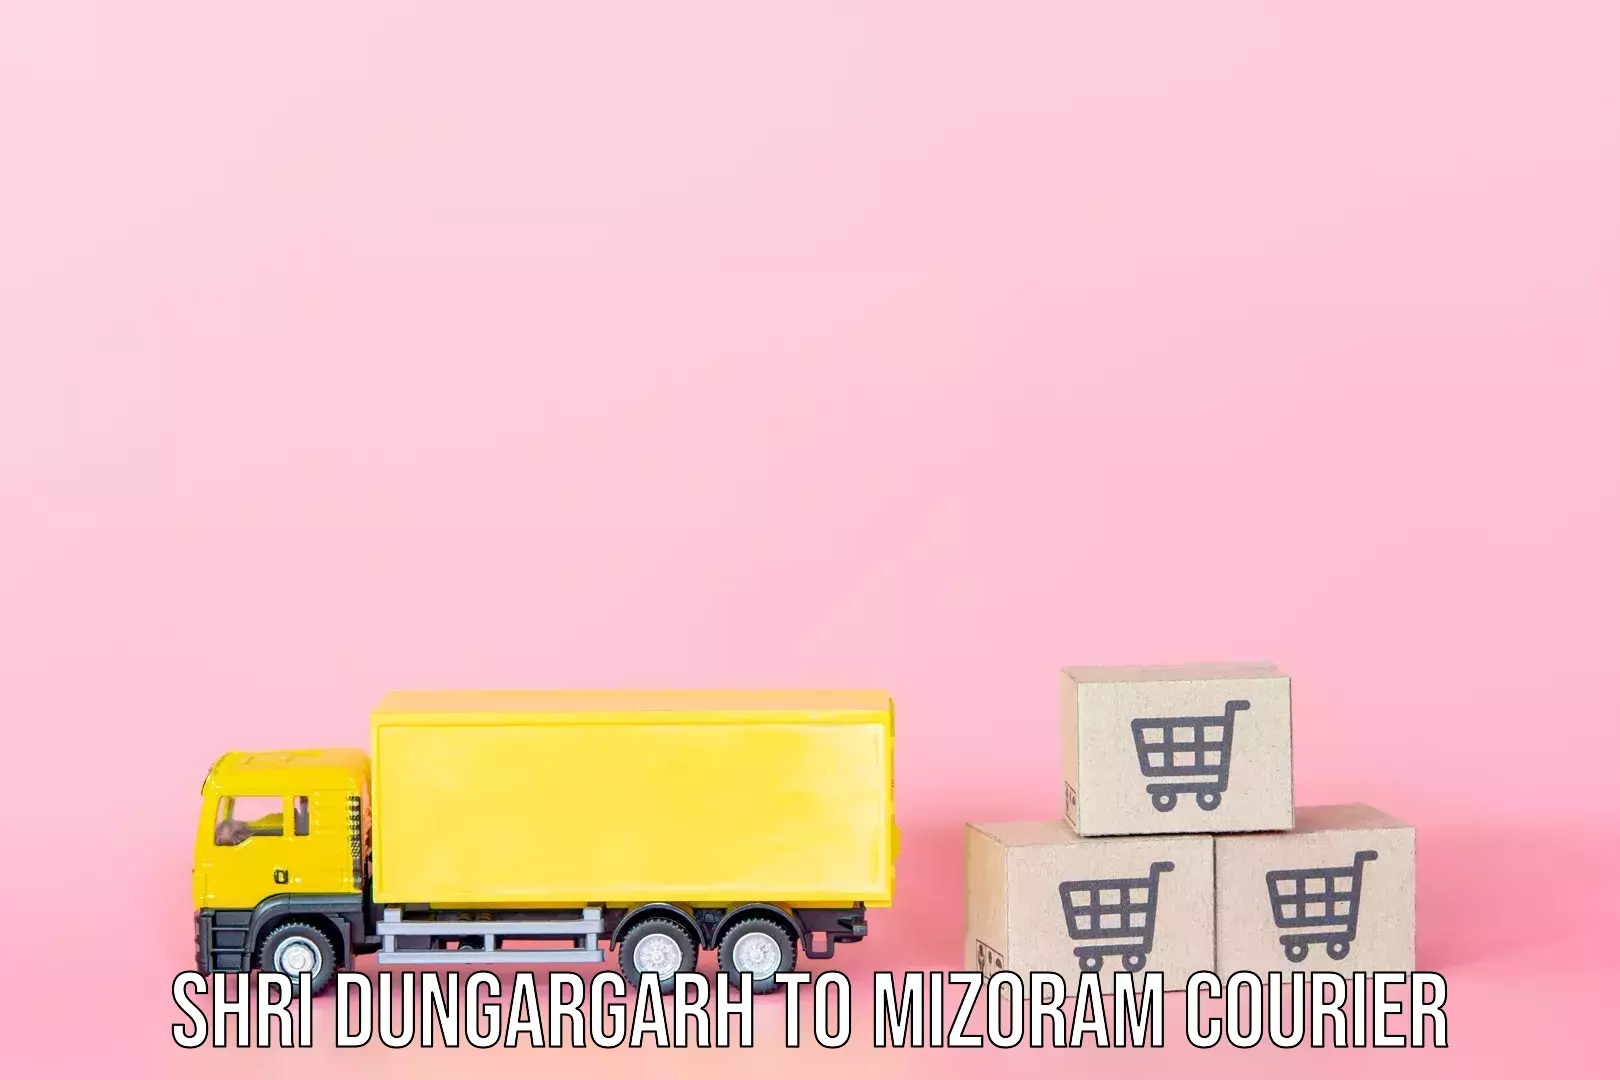 Emergency baggage service Shri Dungargarh to Mizoram